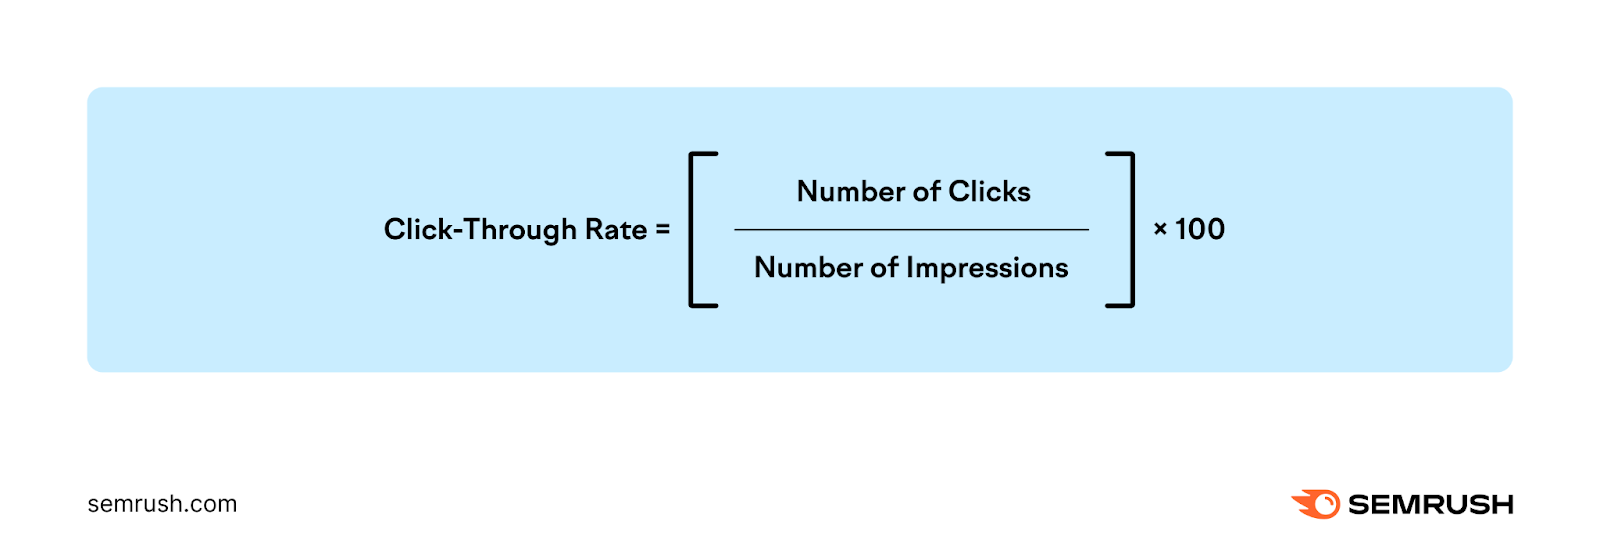 Click-through rate (CTR) formula